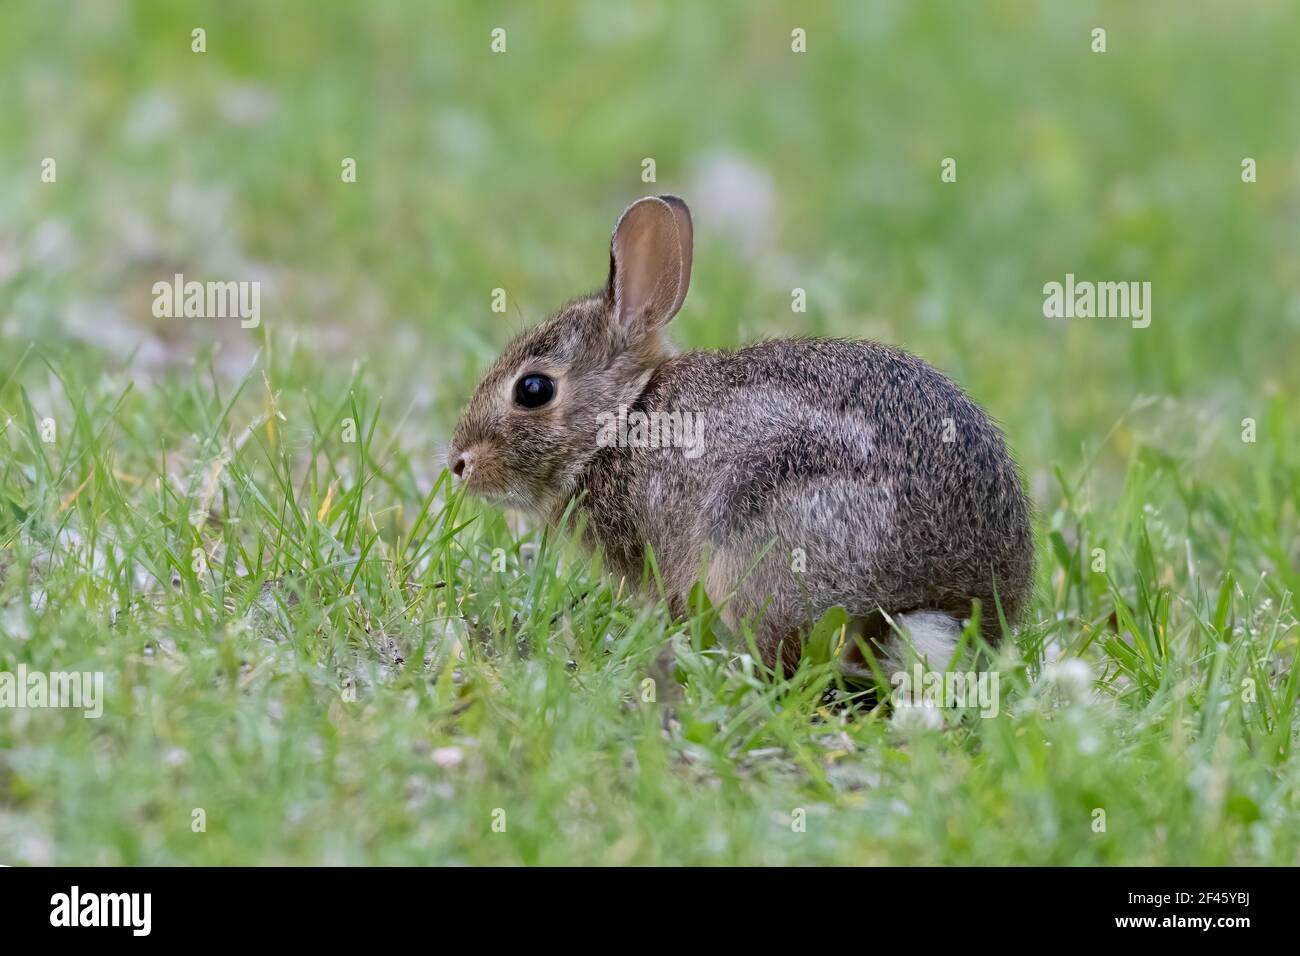 Baby rabbit (kitten) in grass Stock Photo